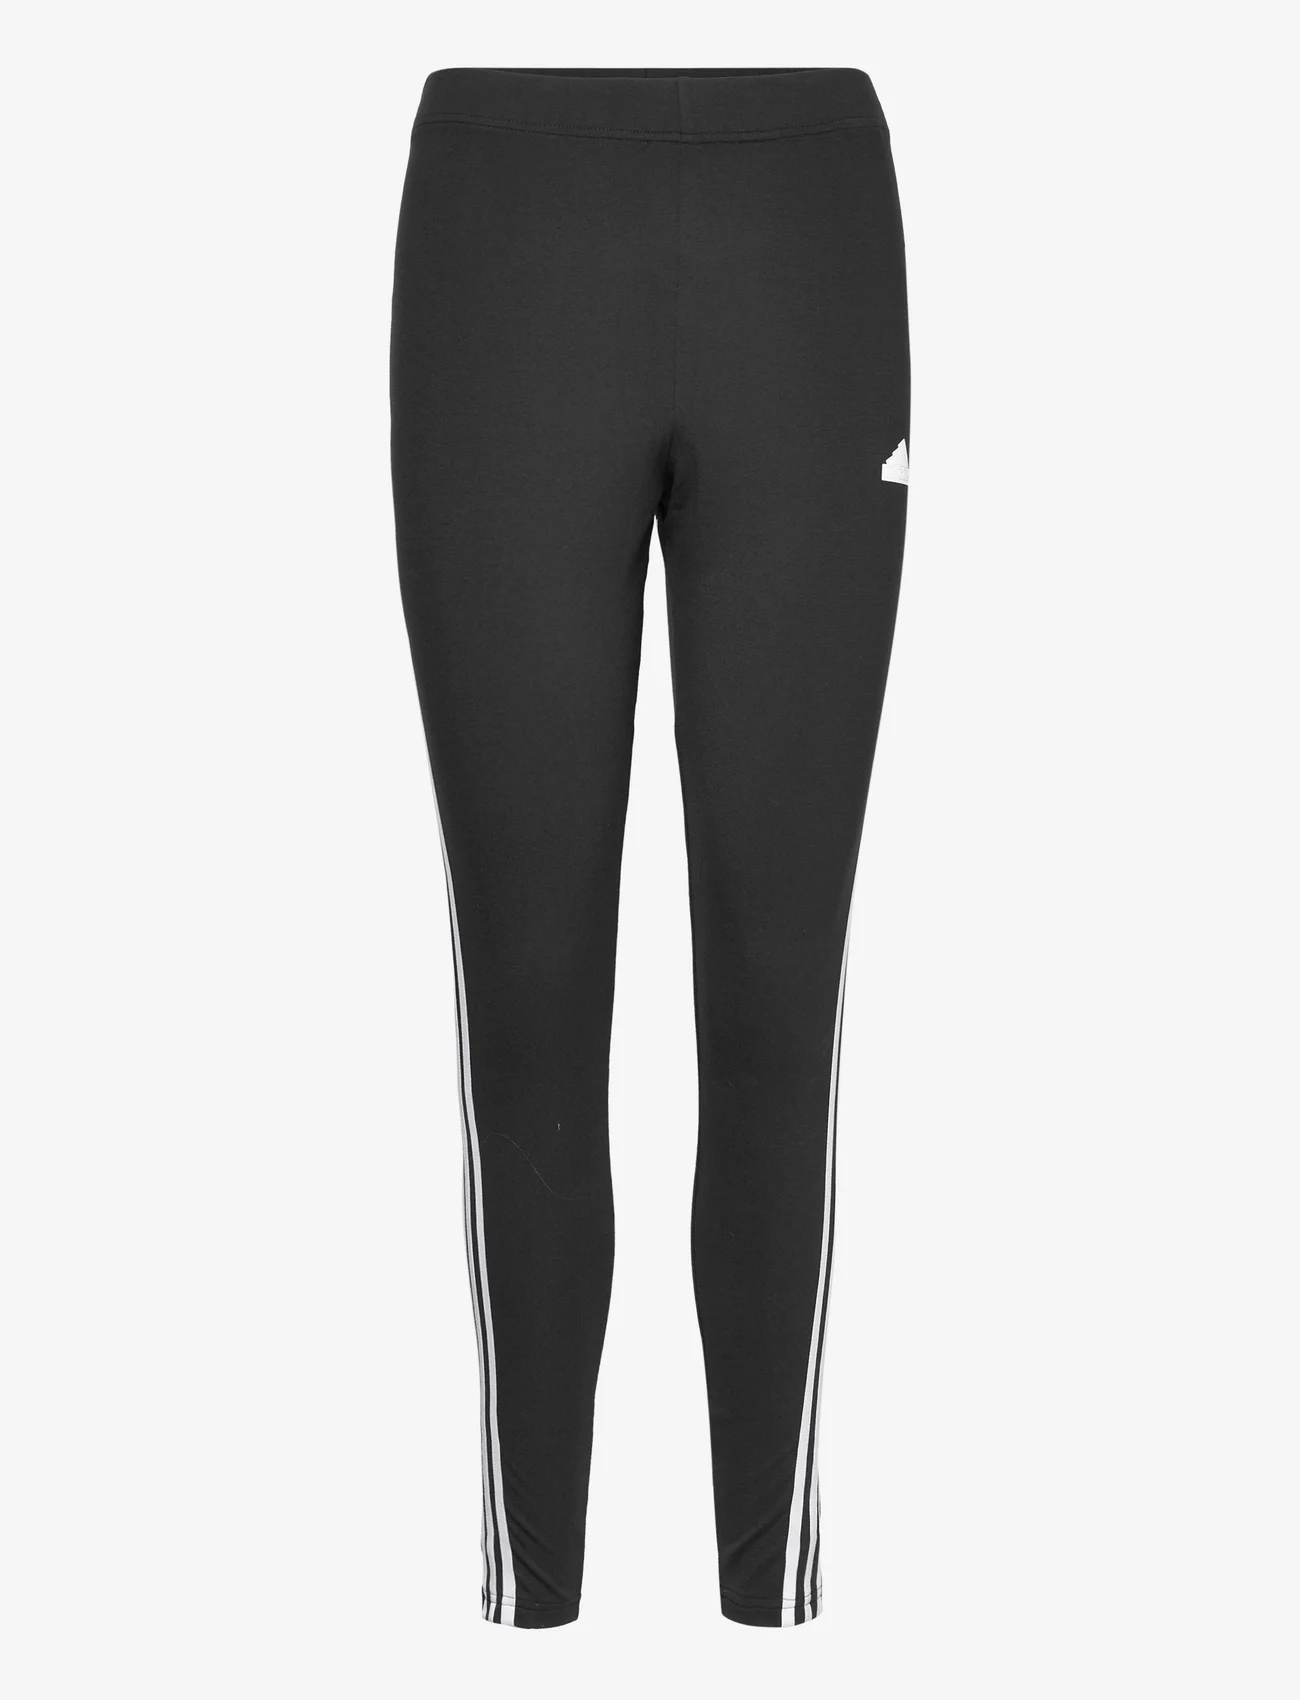 adidas Sportswear - FUTURE ICONS THREE STRIPES LEGGING - leggings - black - 0